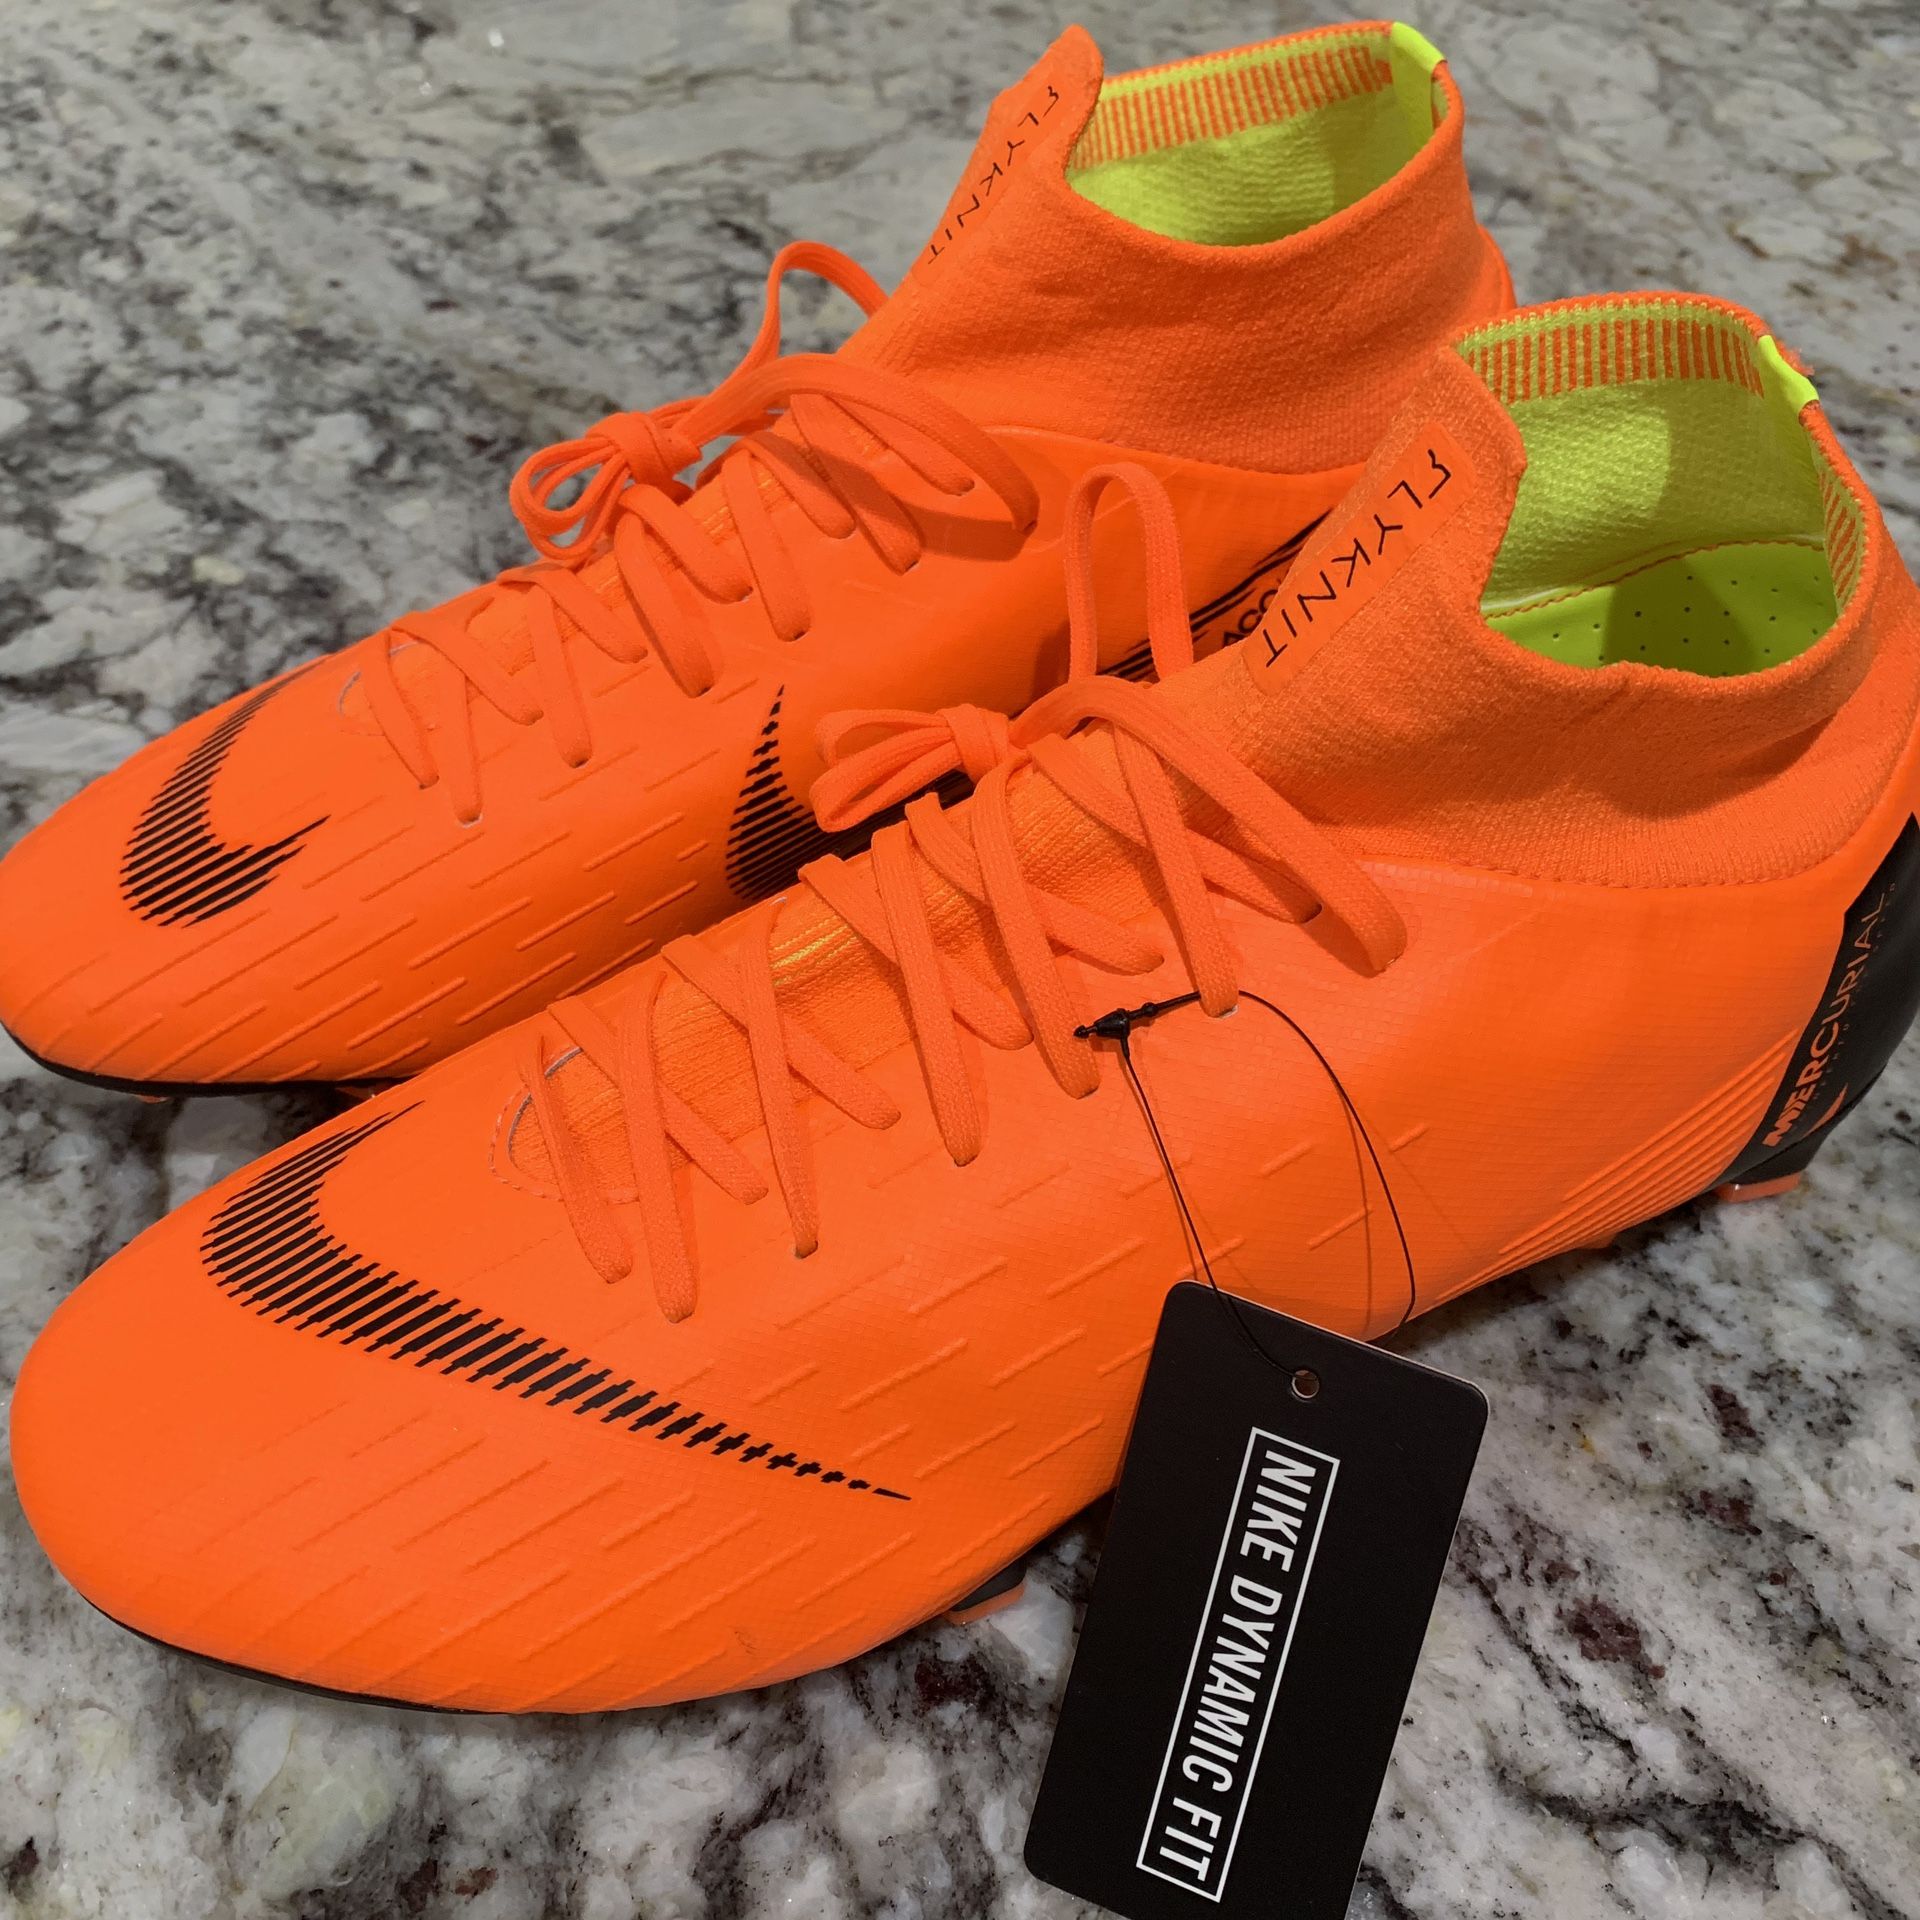 Nike Mercurial Superfly 6 Pro ACC FG Soccer Cleats - Orange - AH7368-810